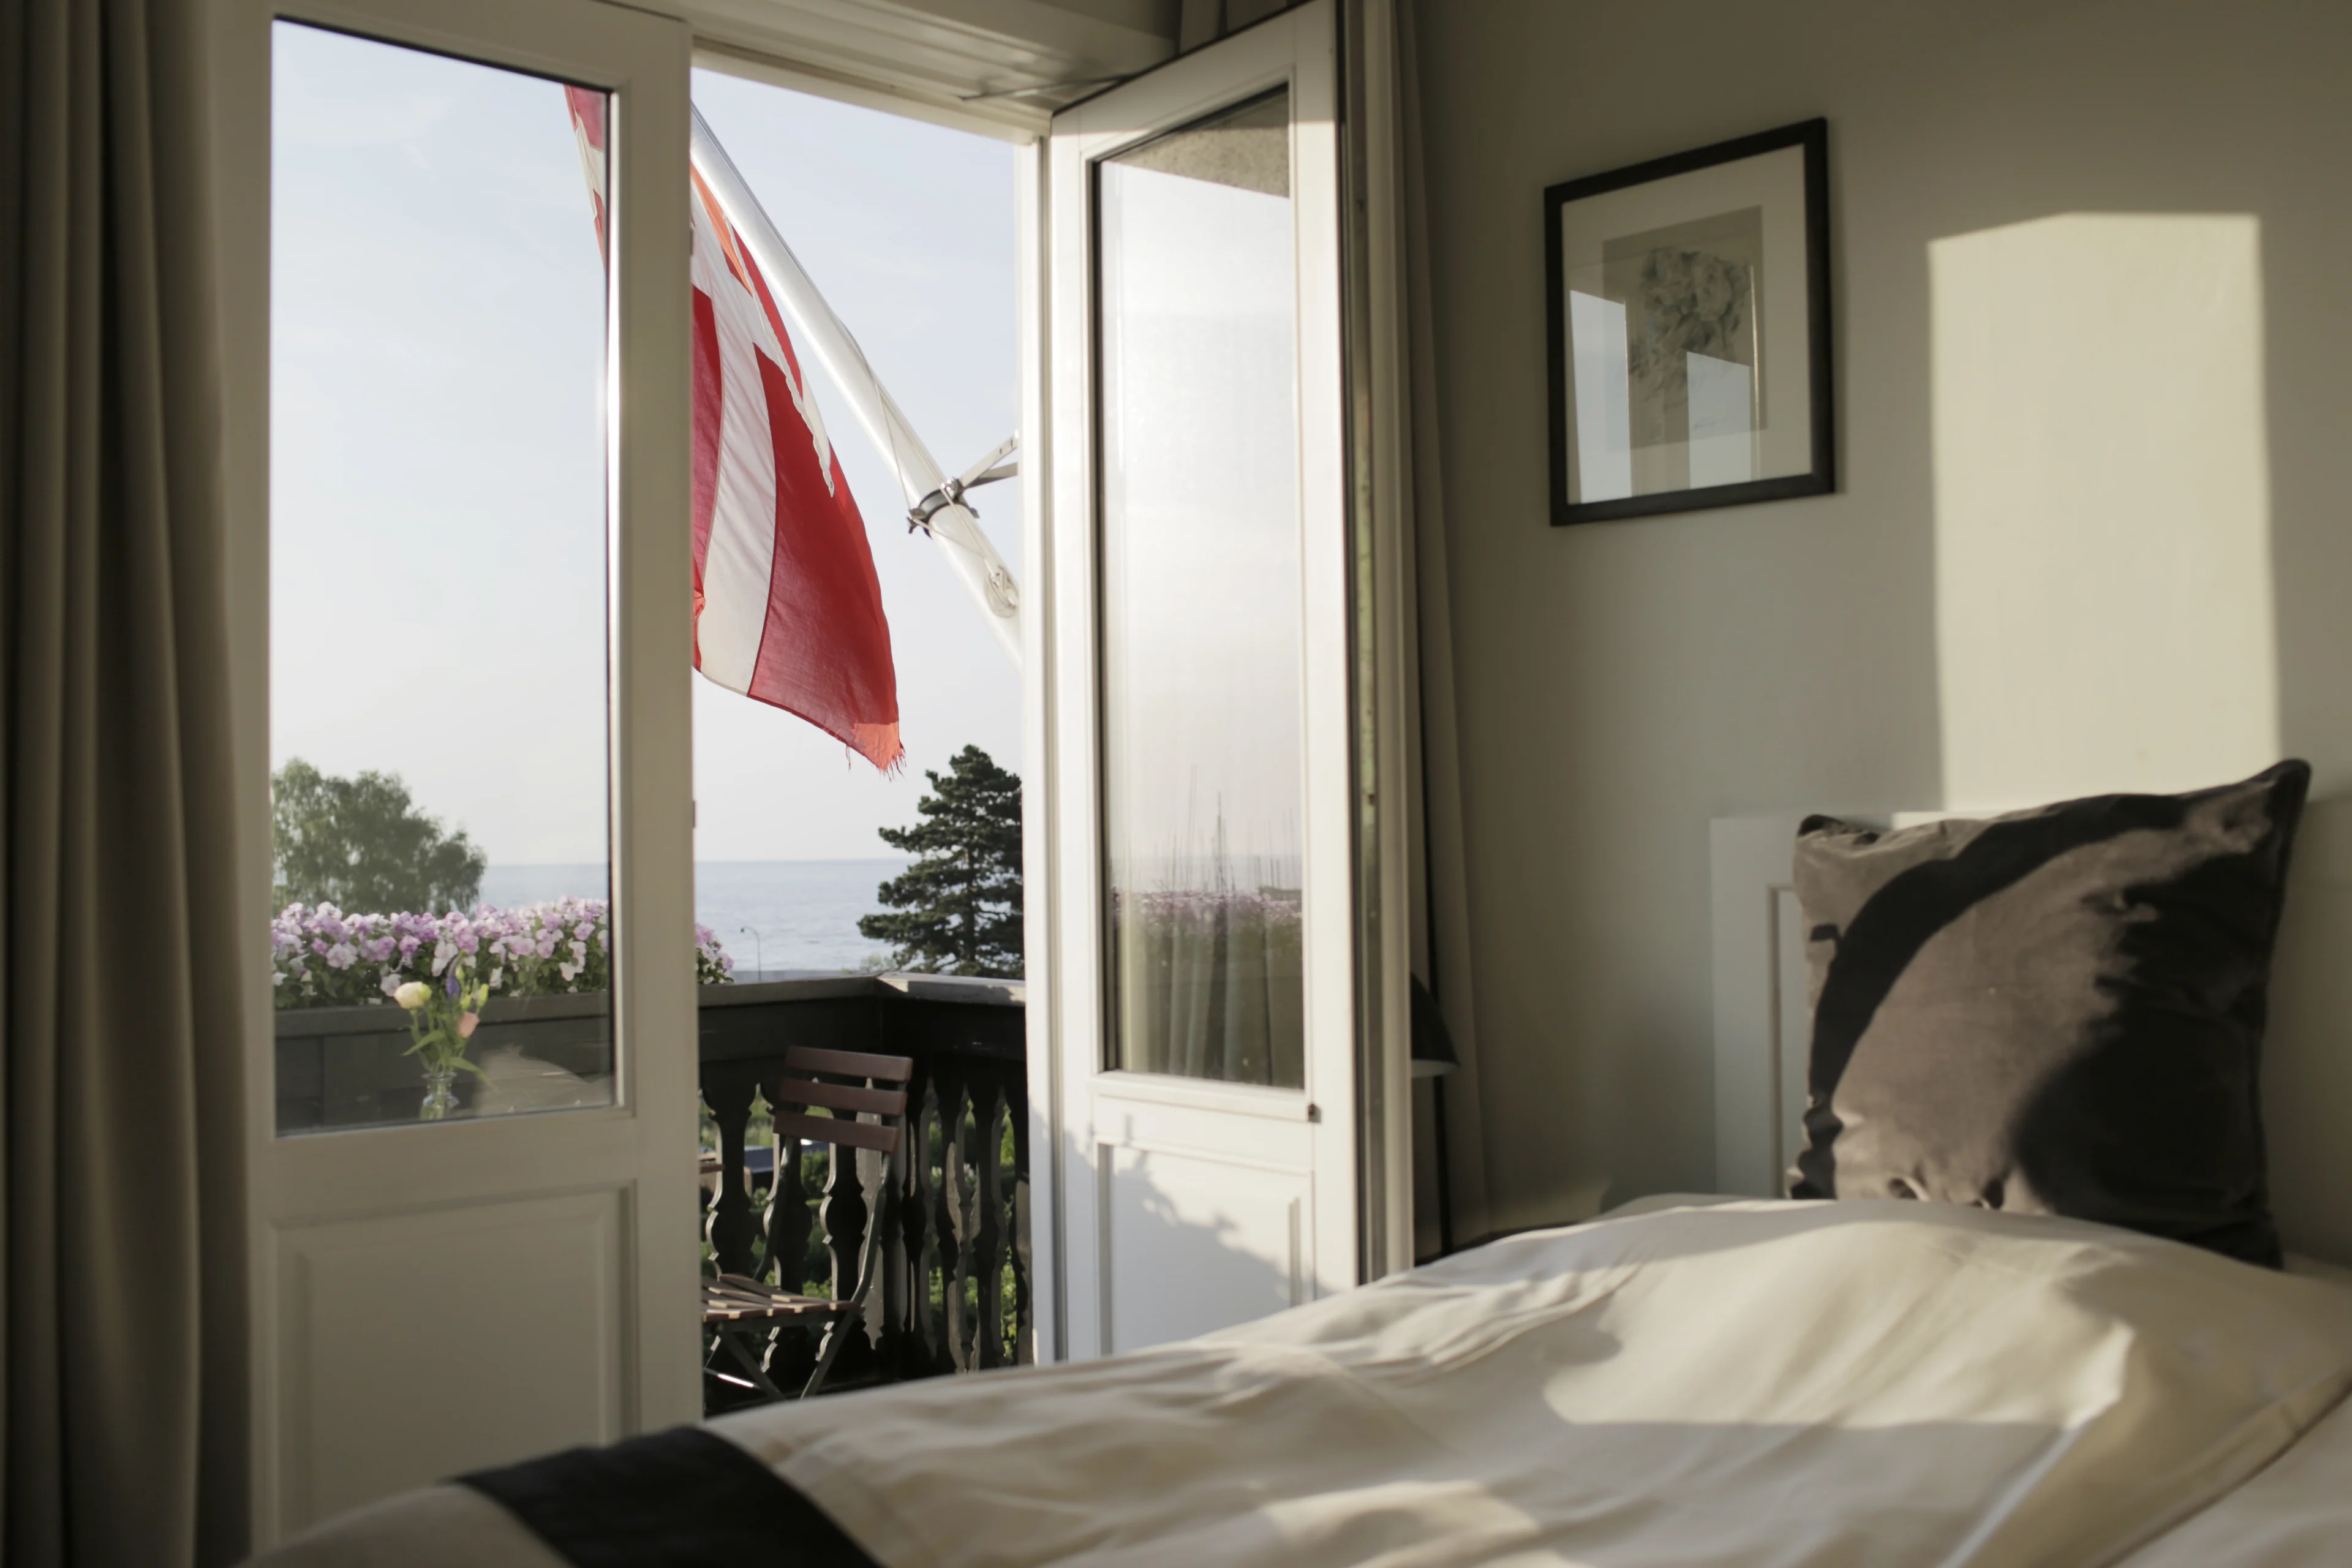 Suit på Skovshoved hotel i Danmark med dansk flagga.